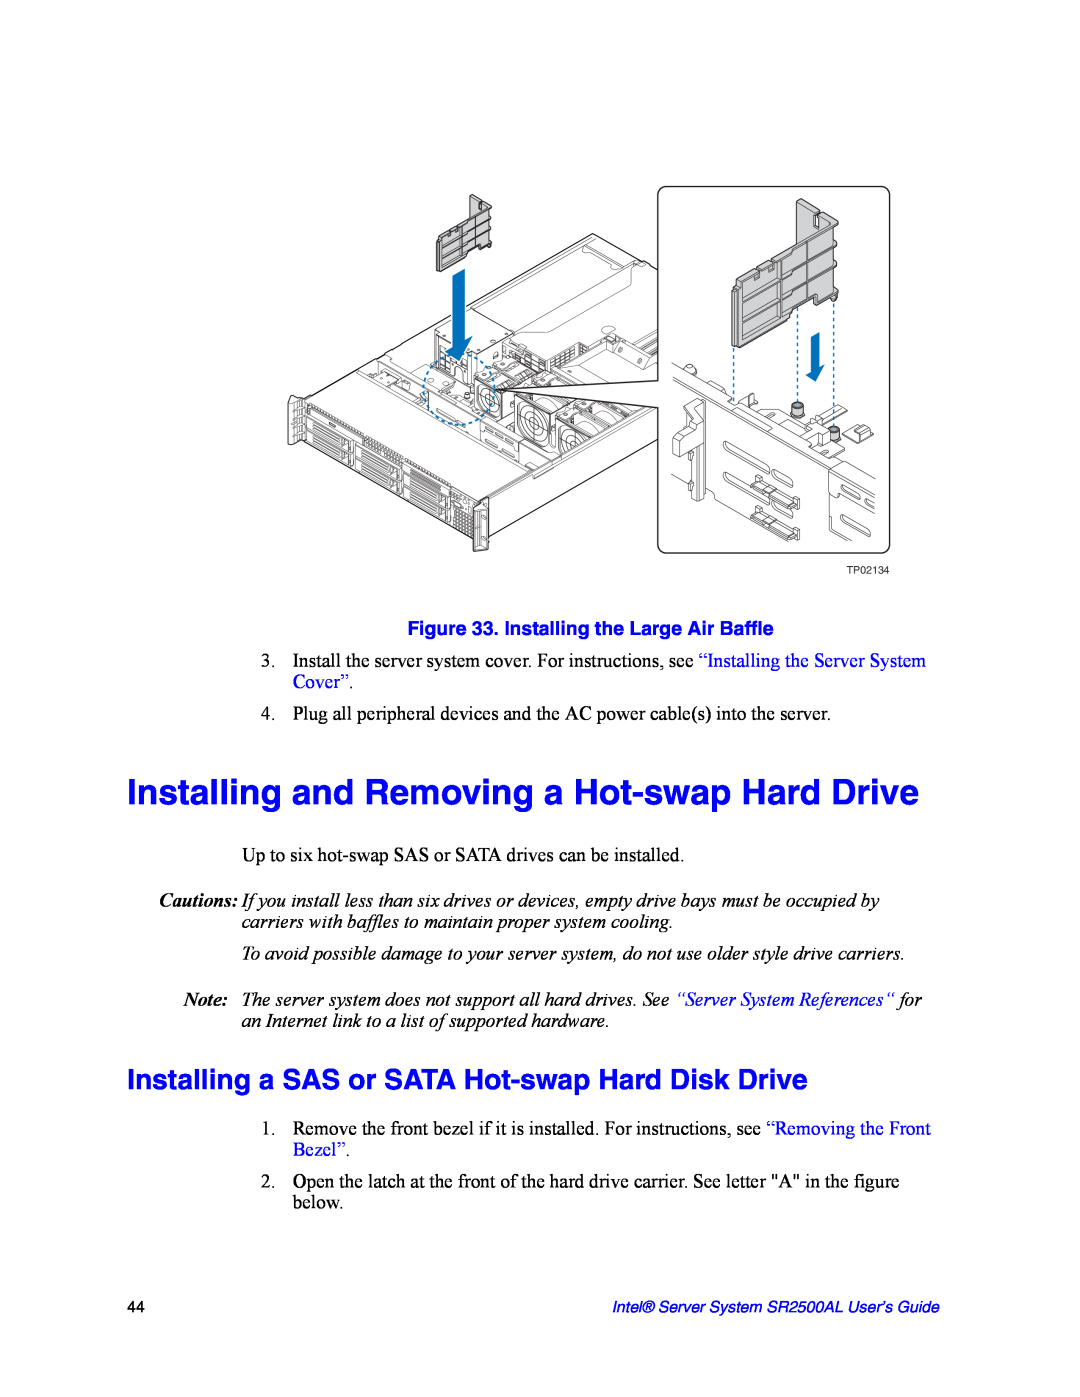 Intel SR2500AL manual Installing and Removing a Hot-swap Hard Drive, Installing a SAS or SATA Hot-swap Hard Disk Drive 